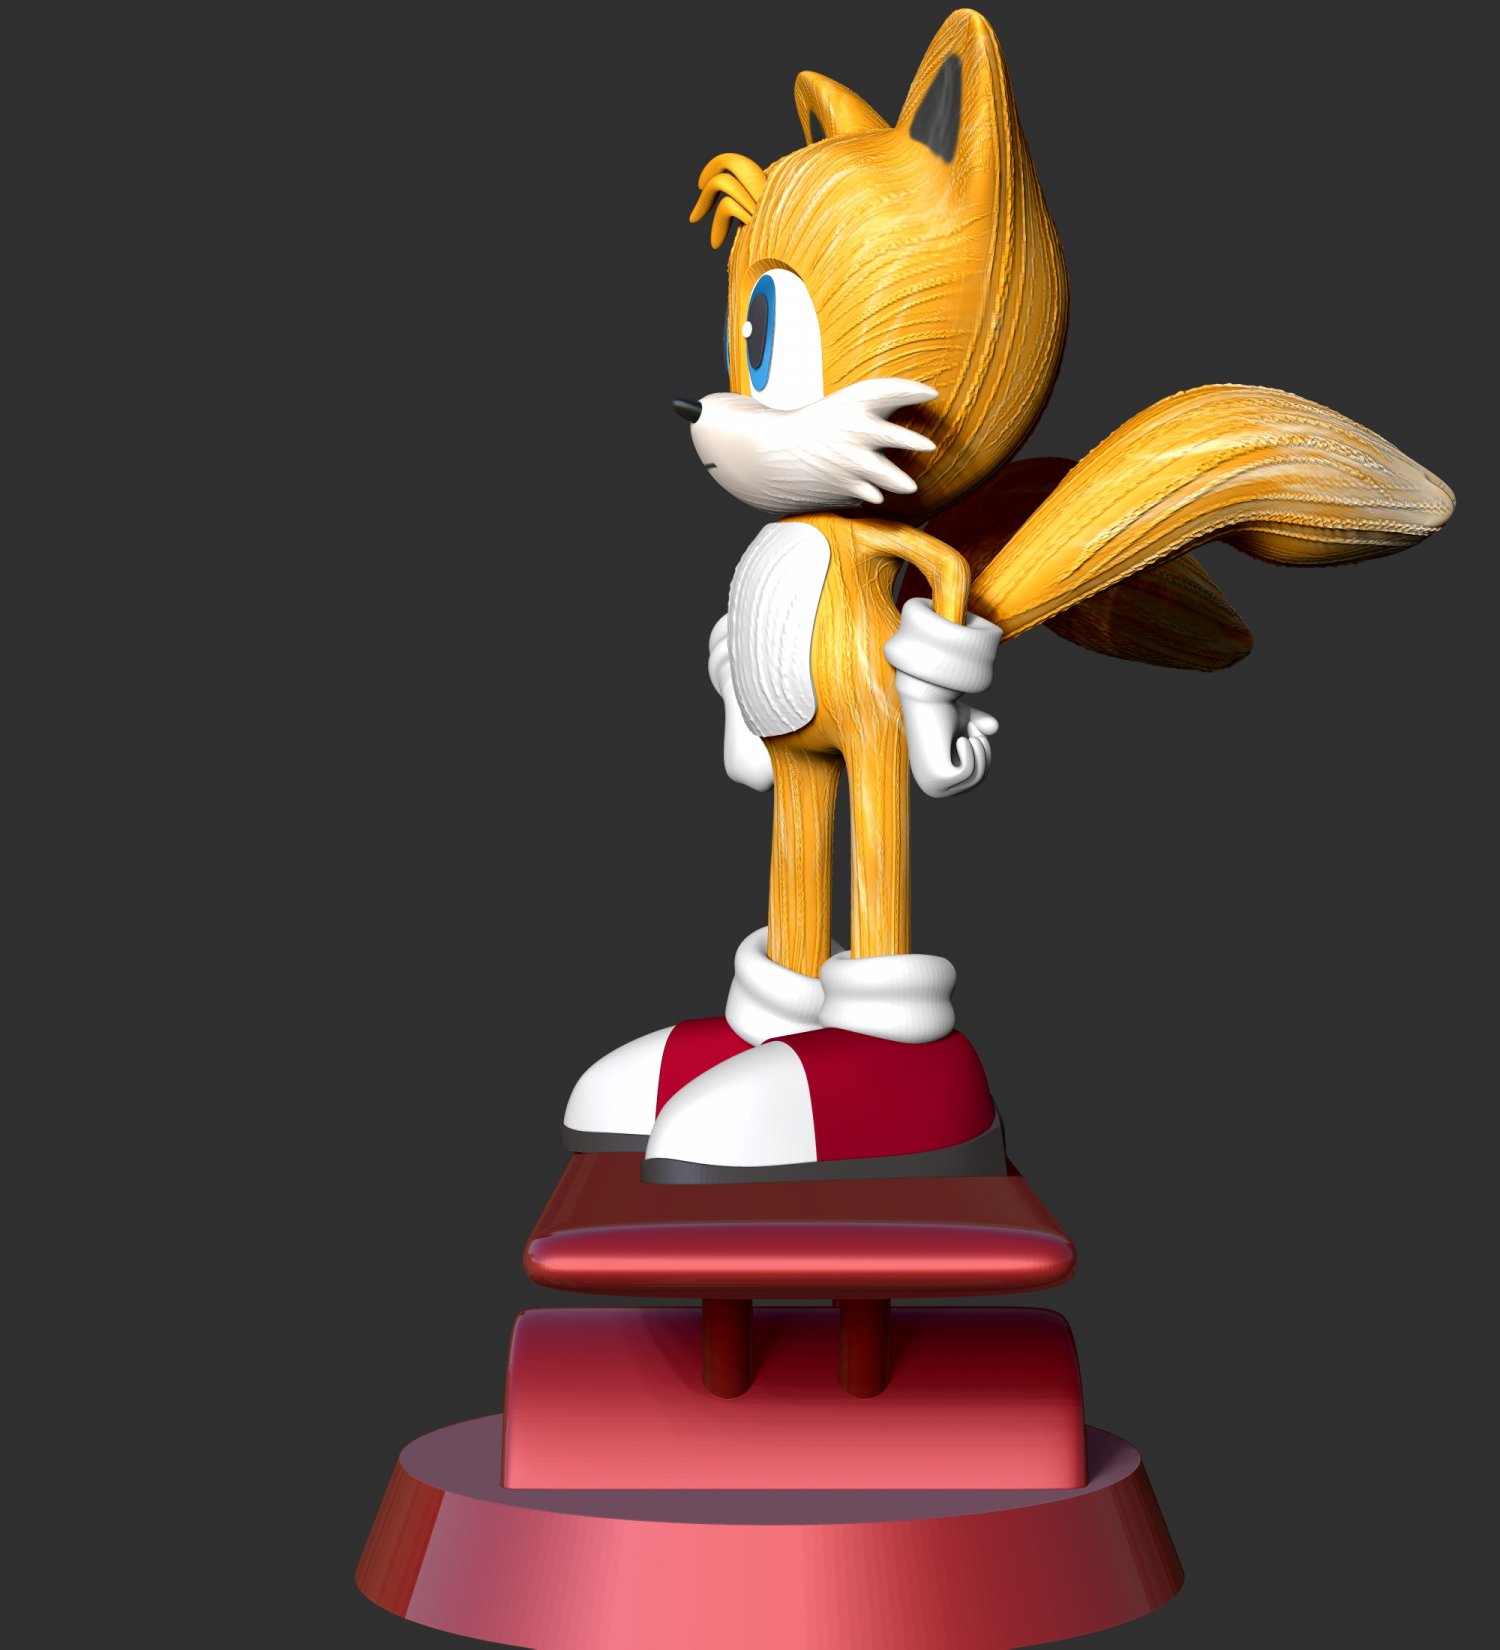 Tails- Sonic the Hedgehog 2 Fanart 3D model 3D printable